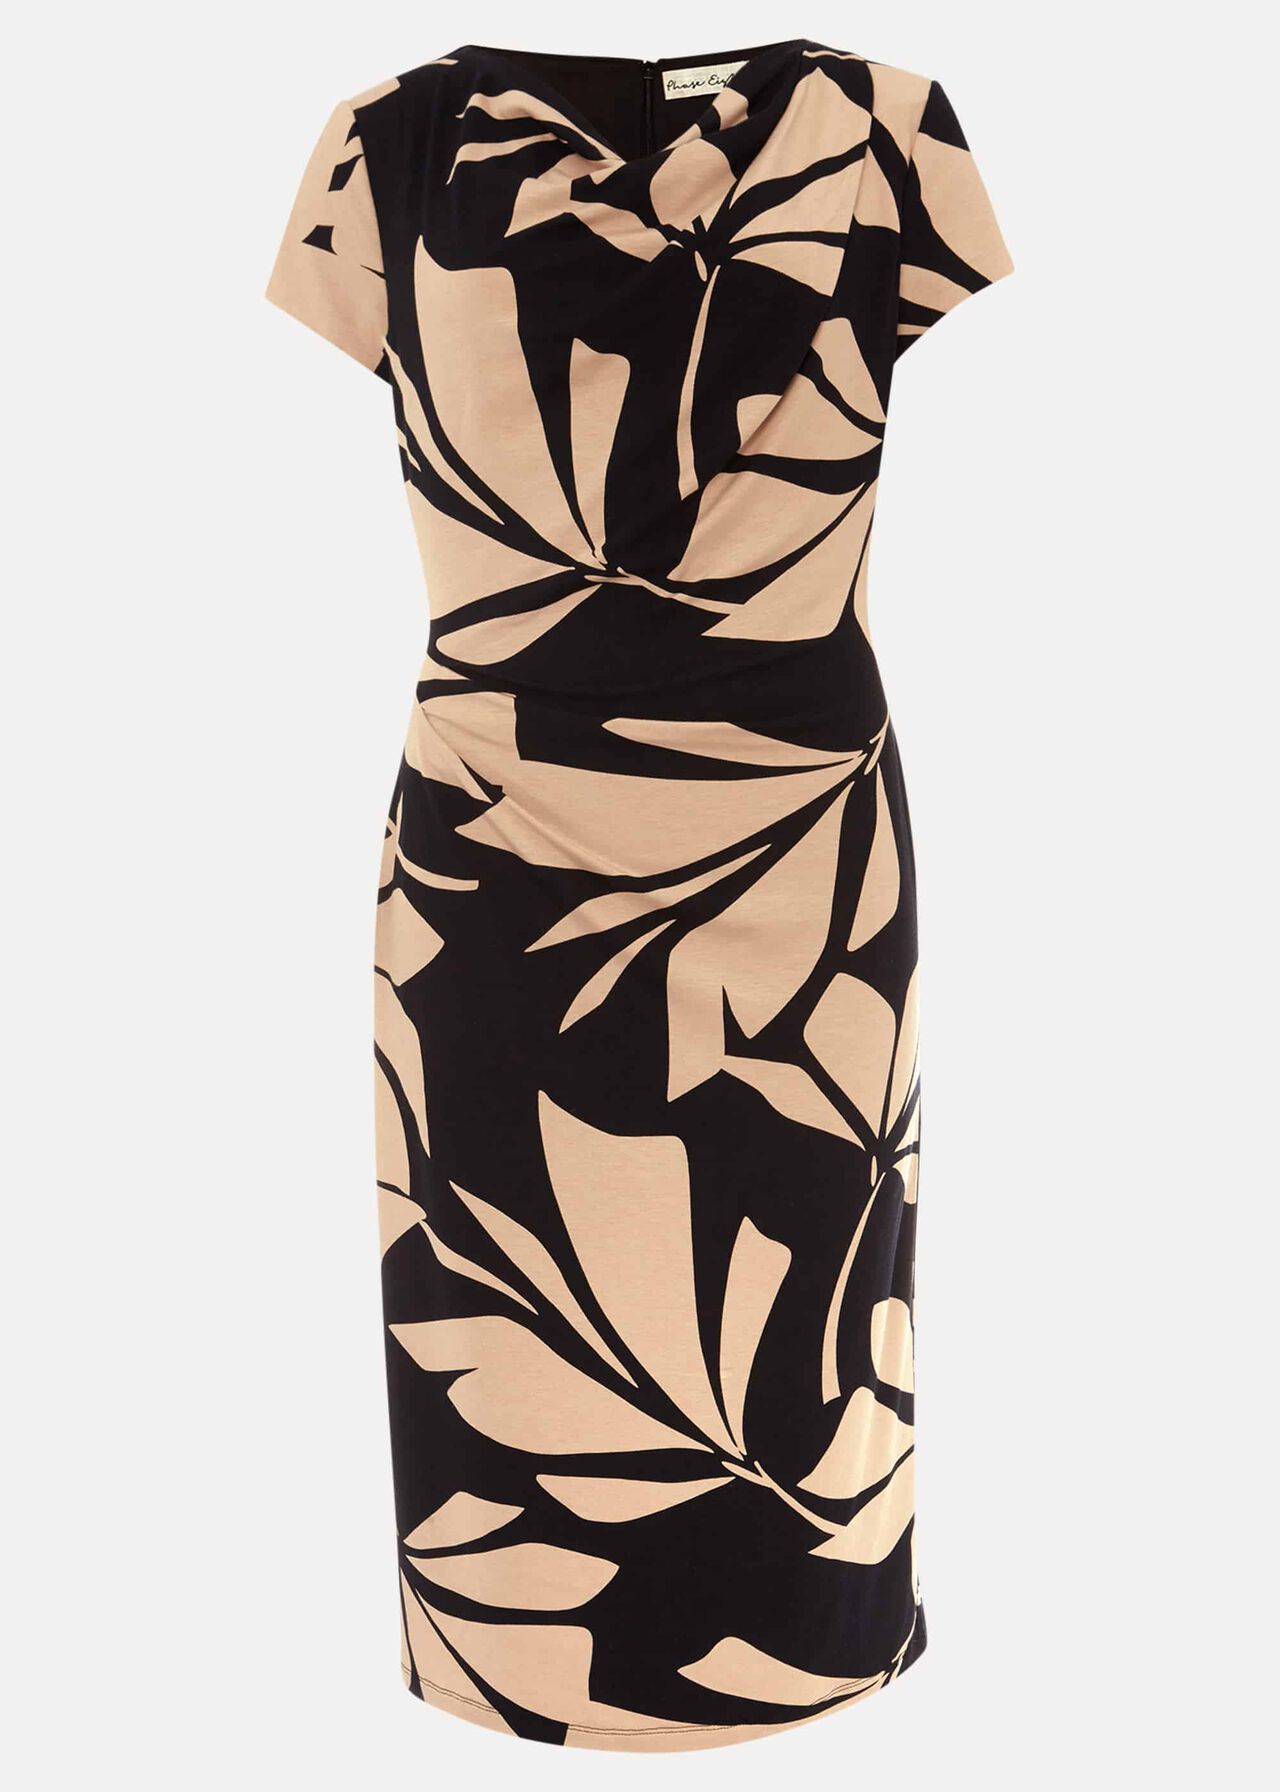 Kadia Palm Print Jersey Dress